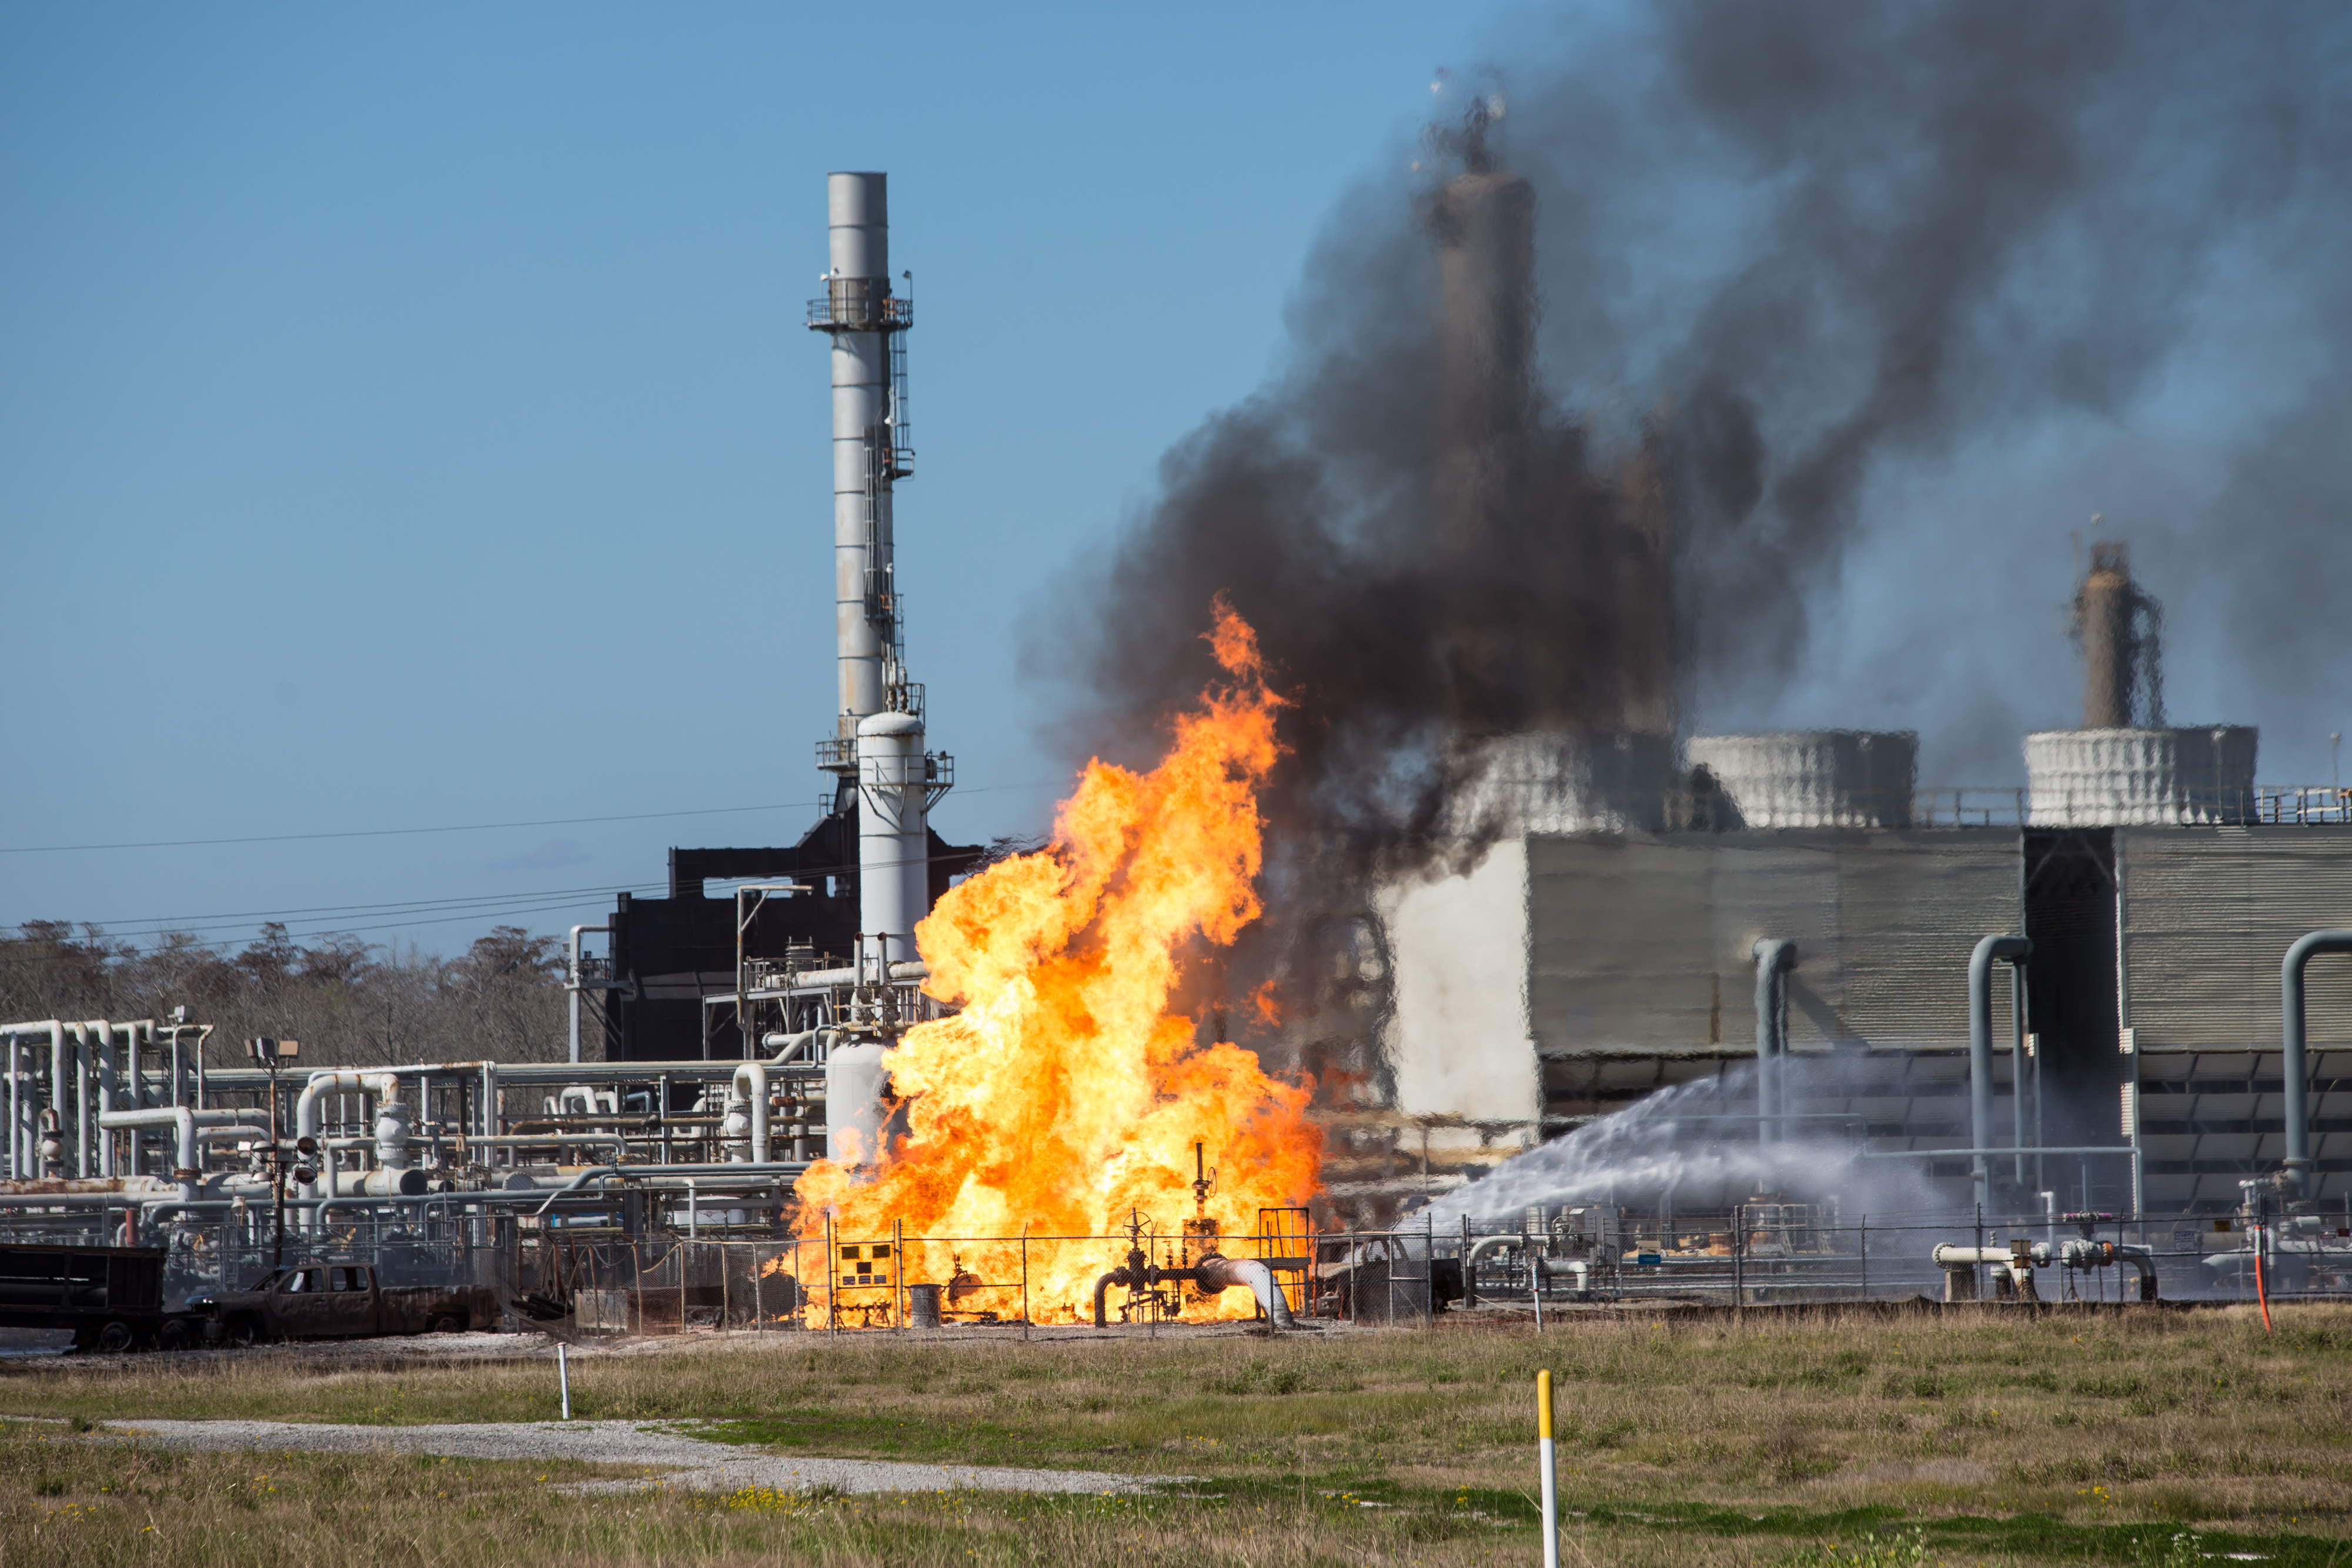 Phillips 66 Pipeline Explosion in Paradis, Louisiana - Photography Julie Dermansky 2